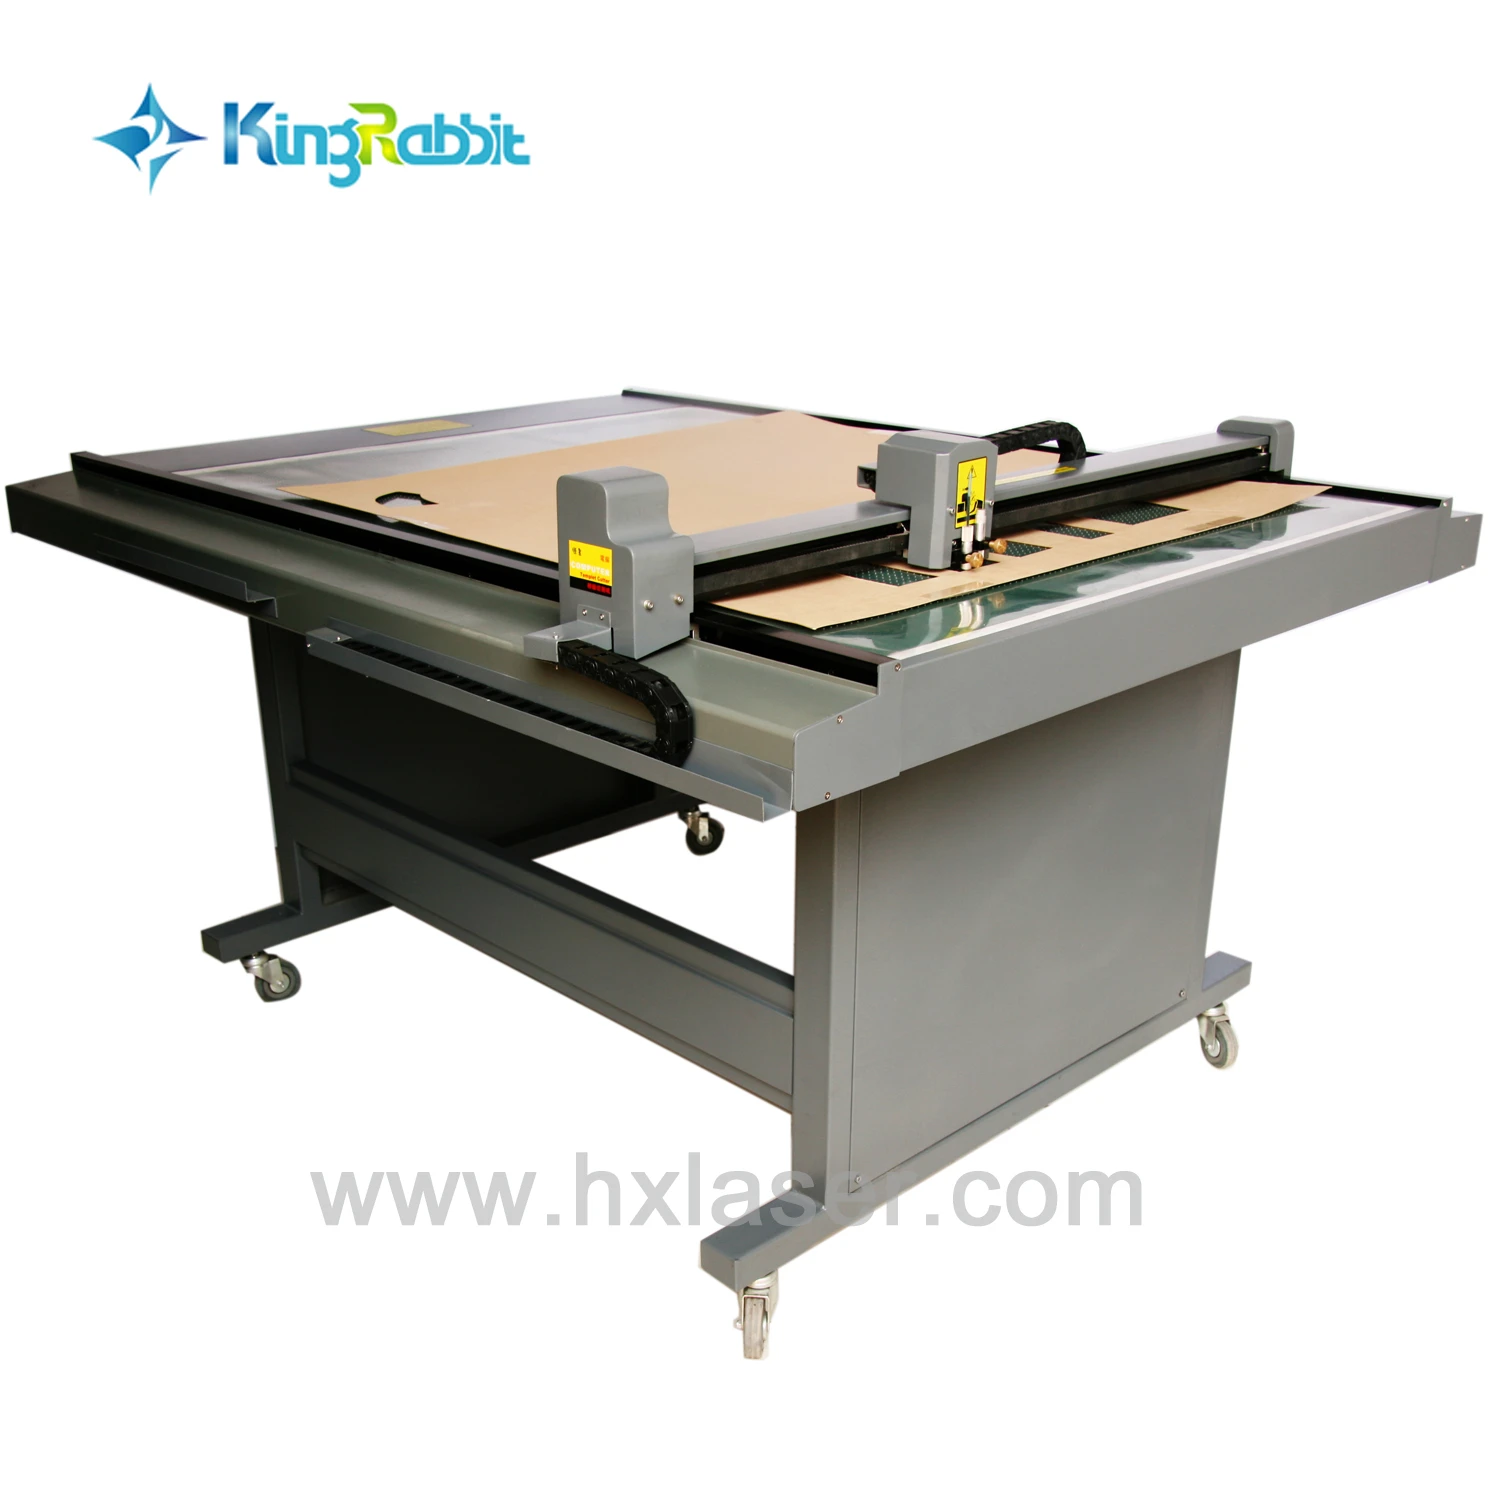 New design easy operation  King Rabbit flatbed cutting plotter HC-9012